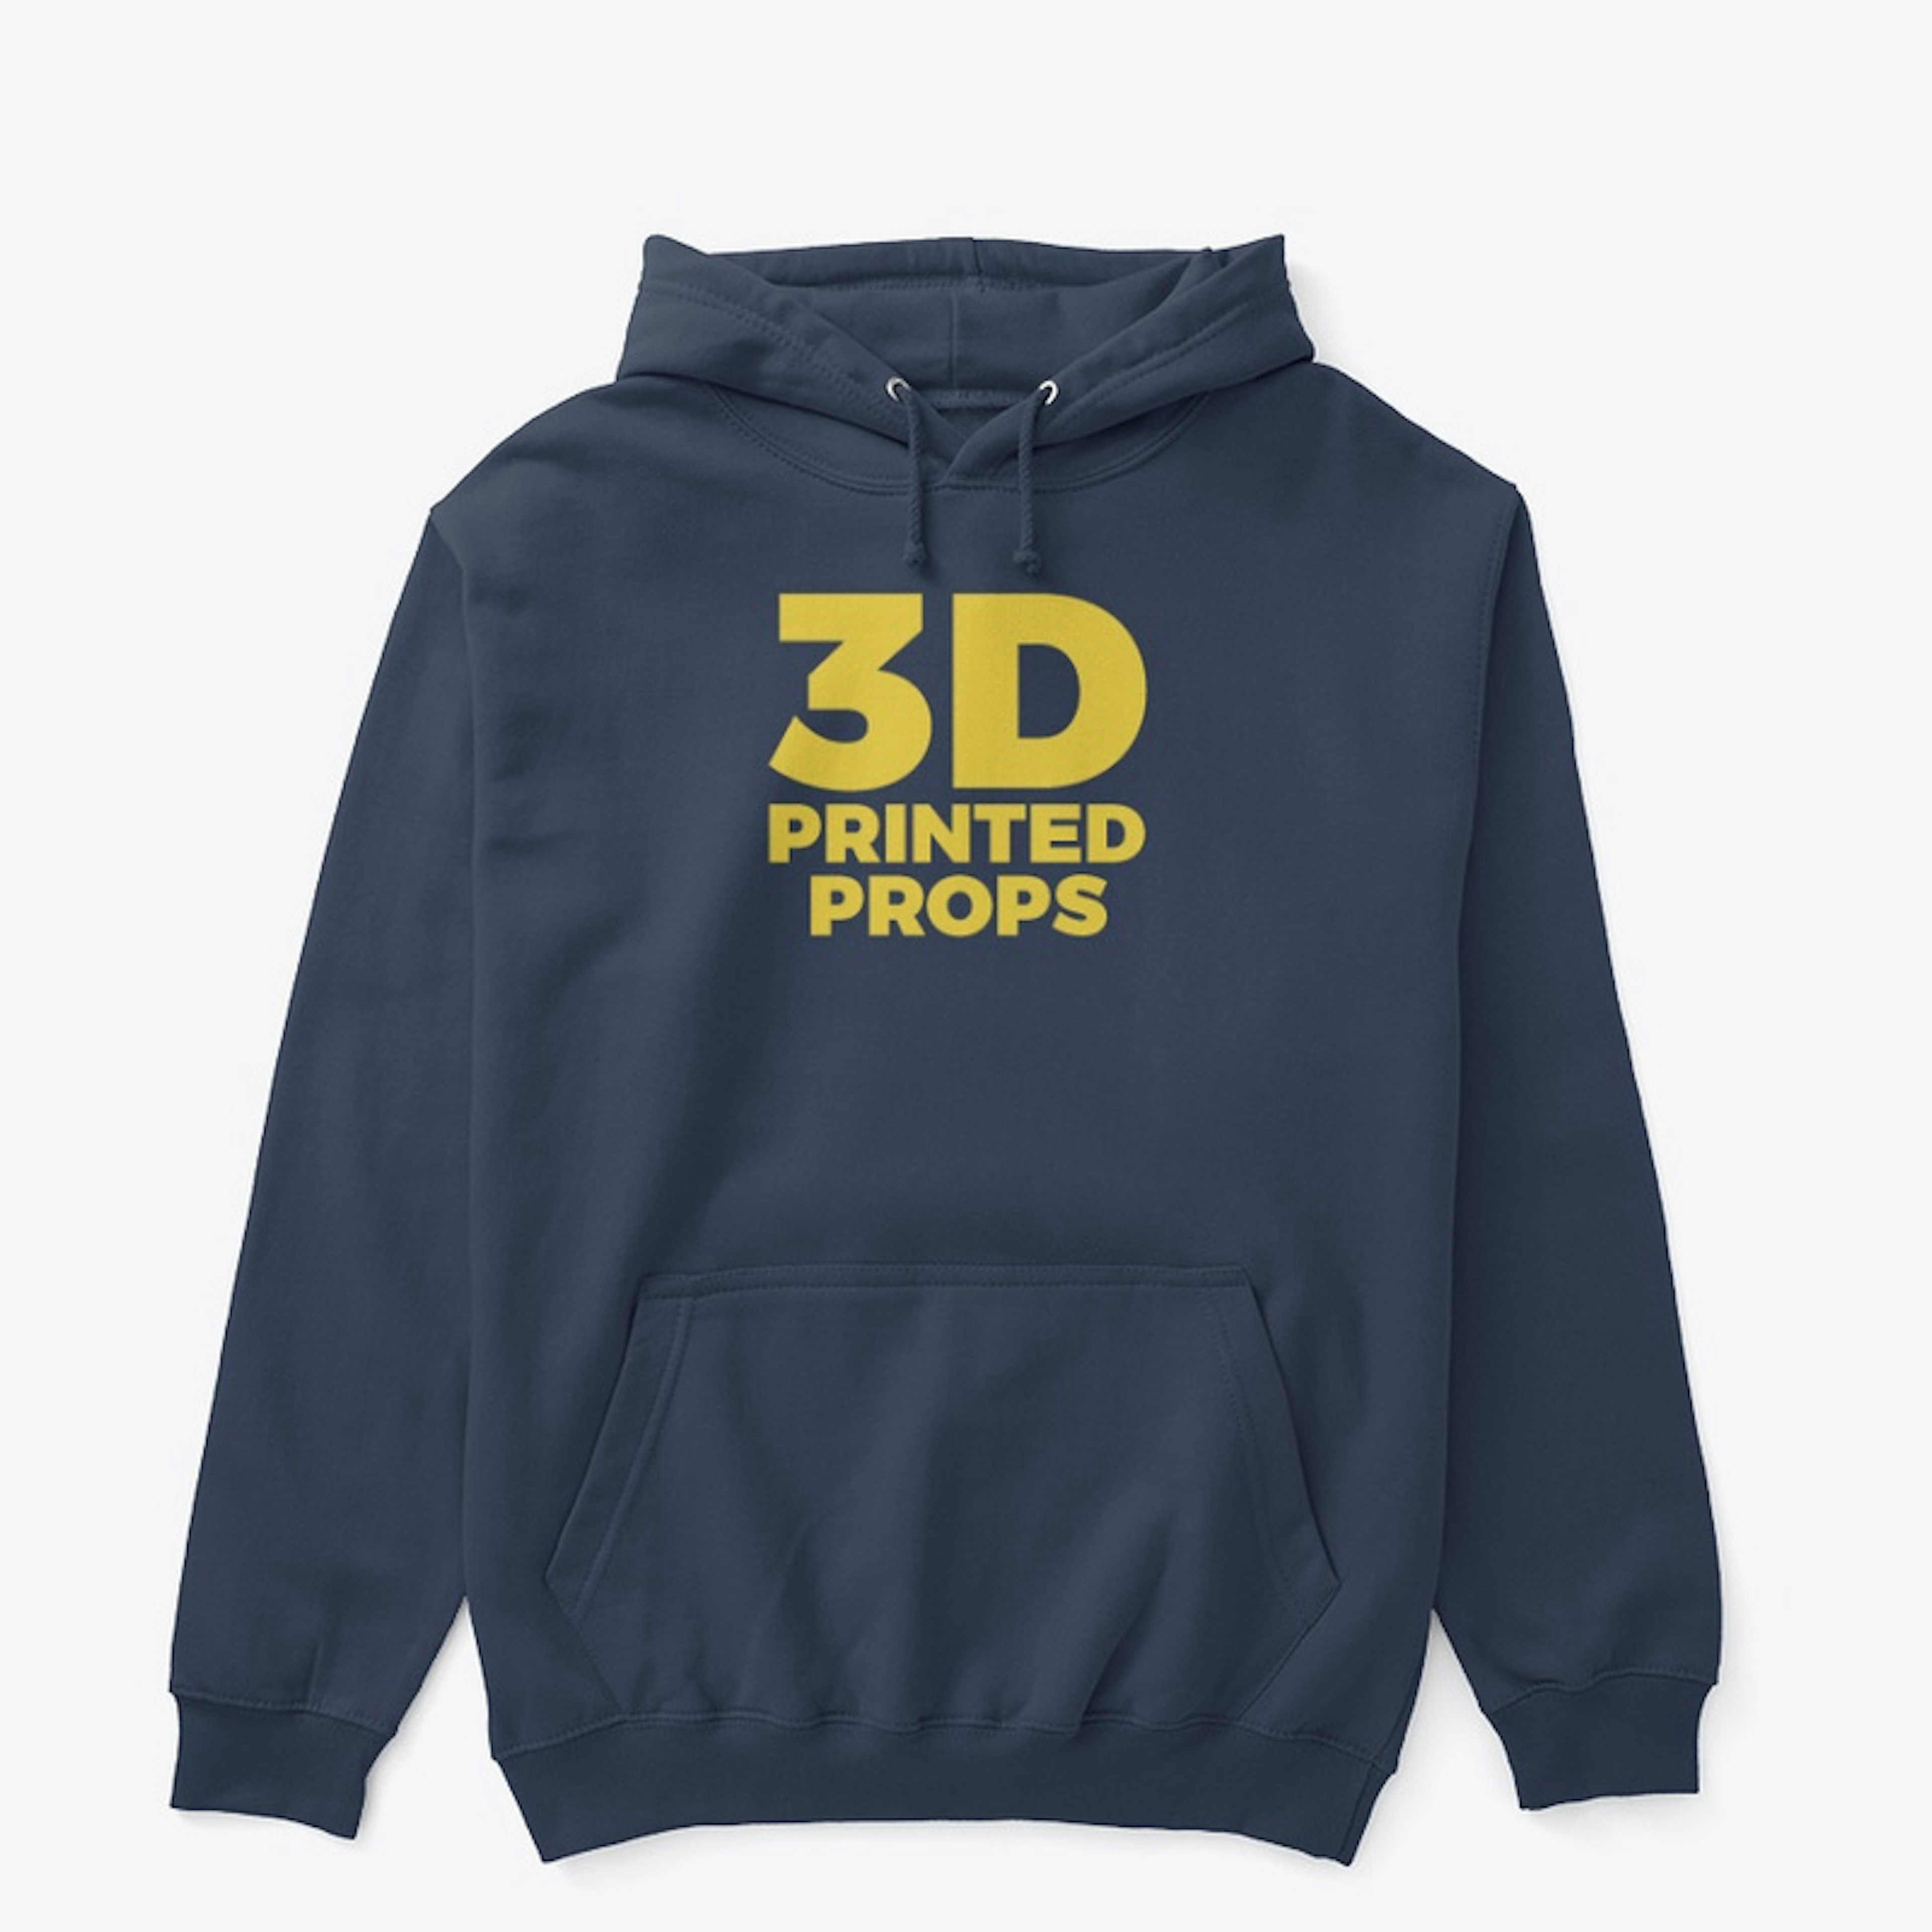 3D Printed Props